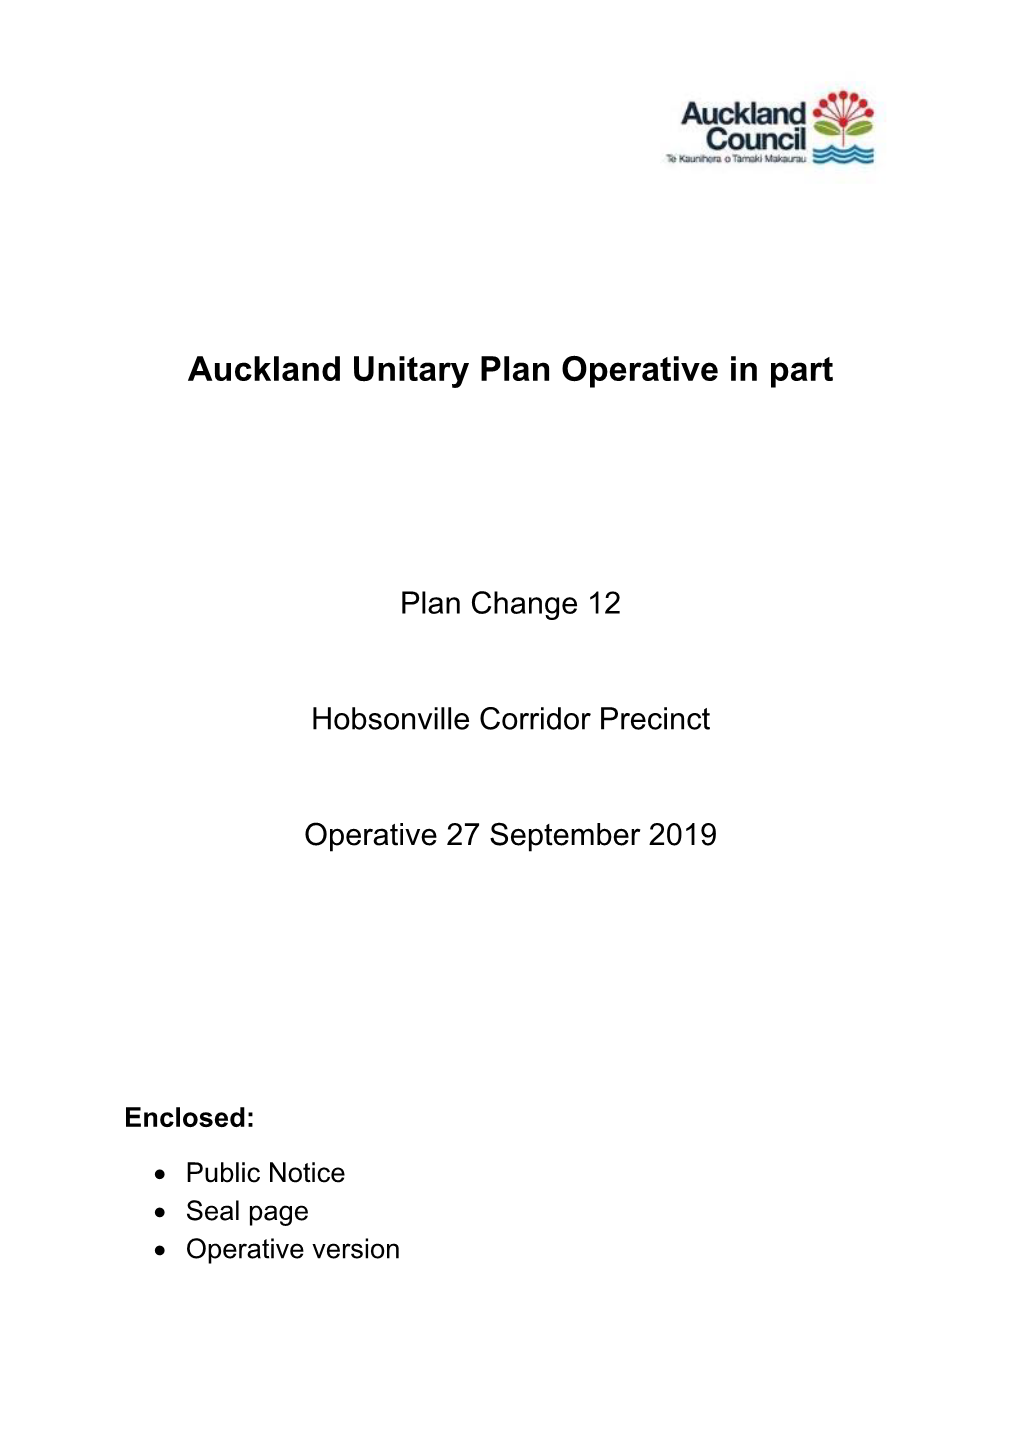 Plan Change 12 Operative 27 September 2019 PDF Download 2.3 MB